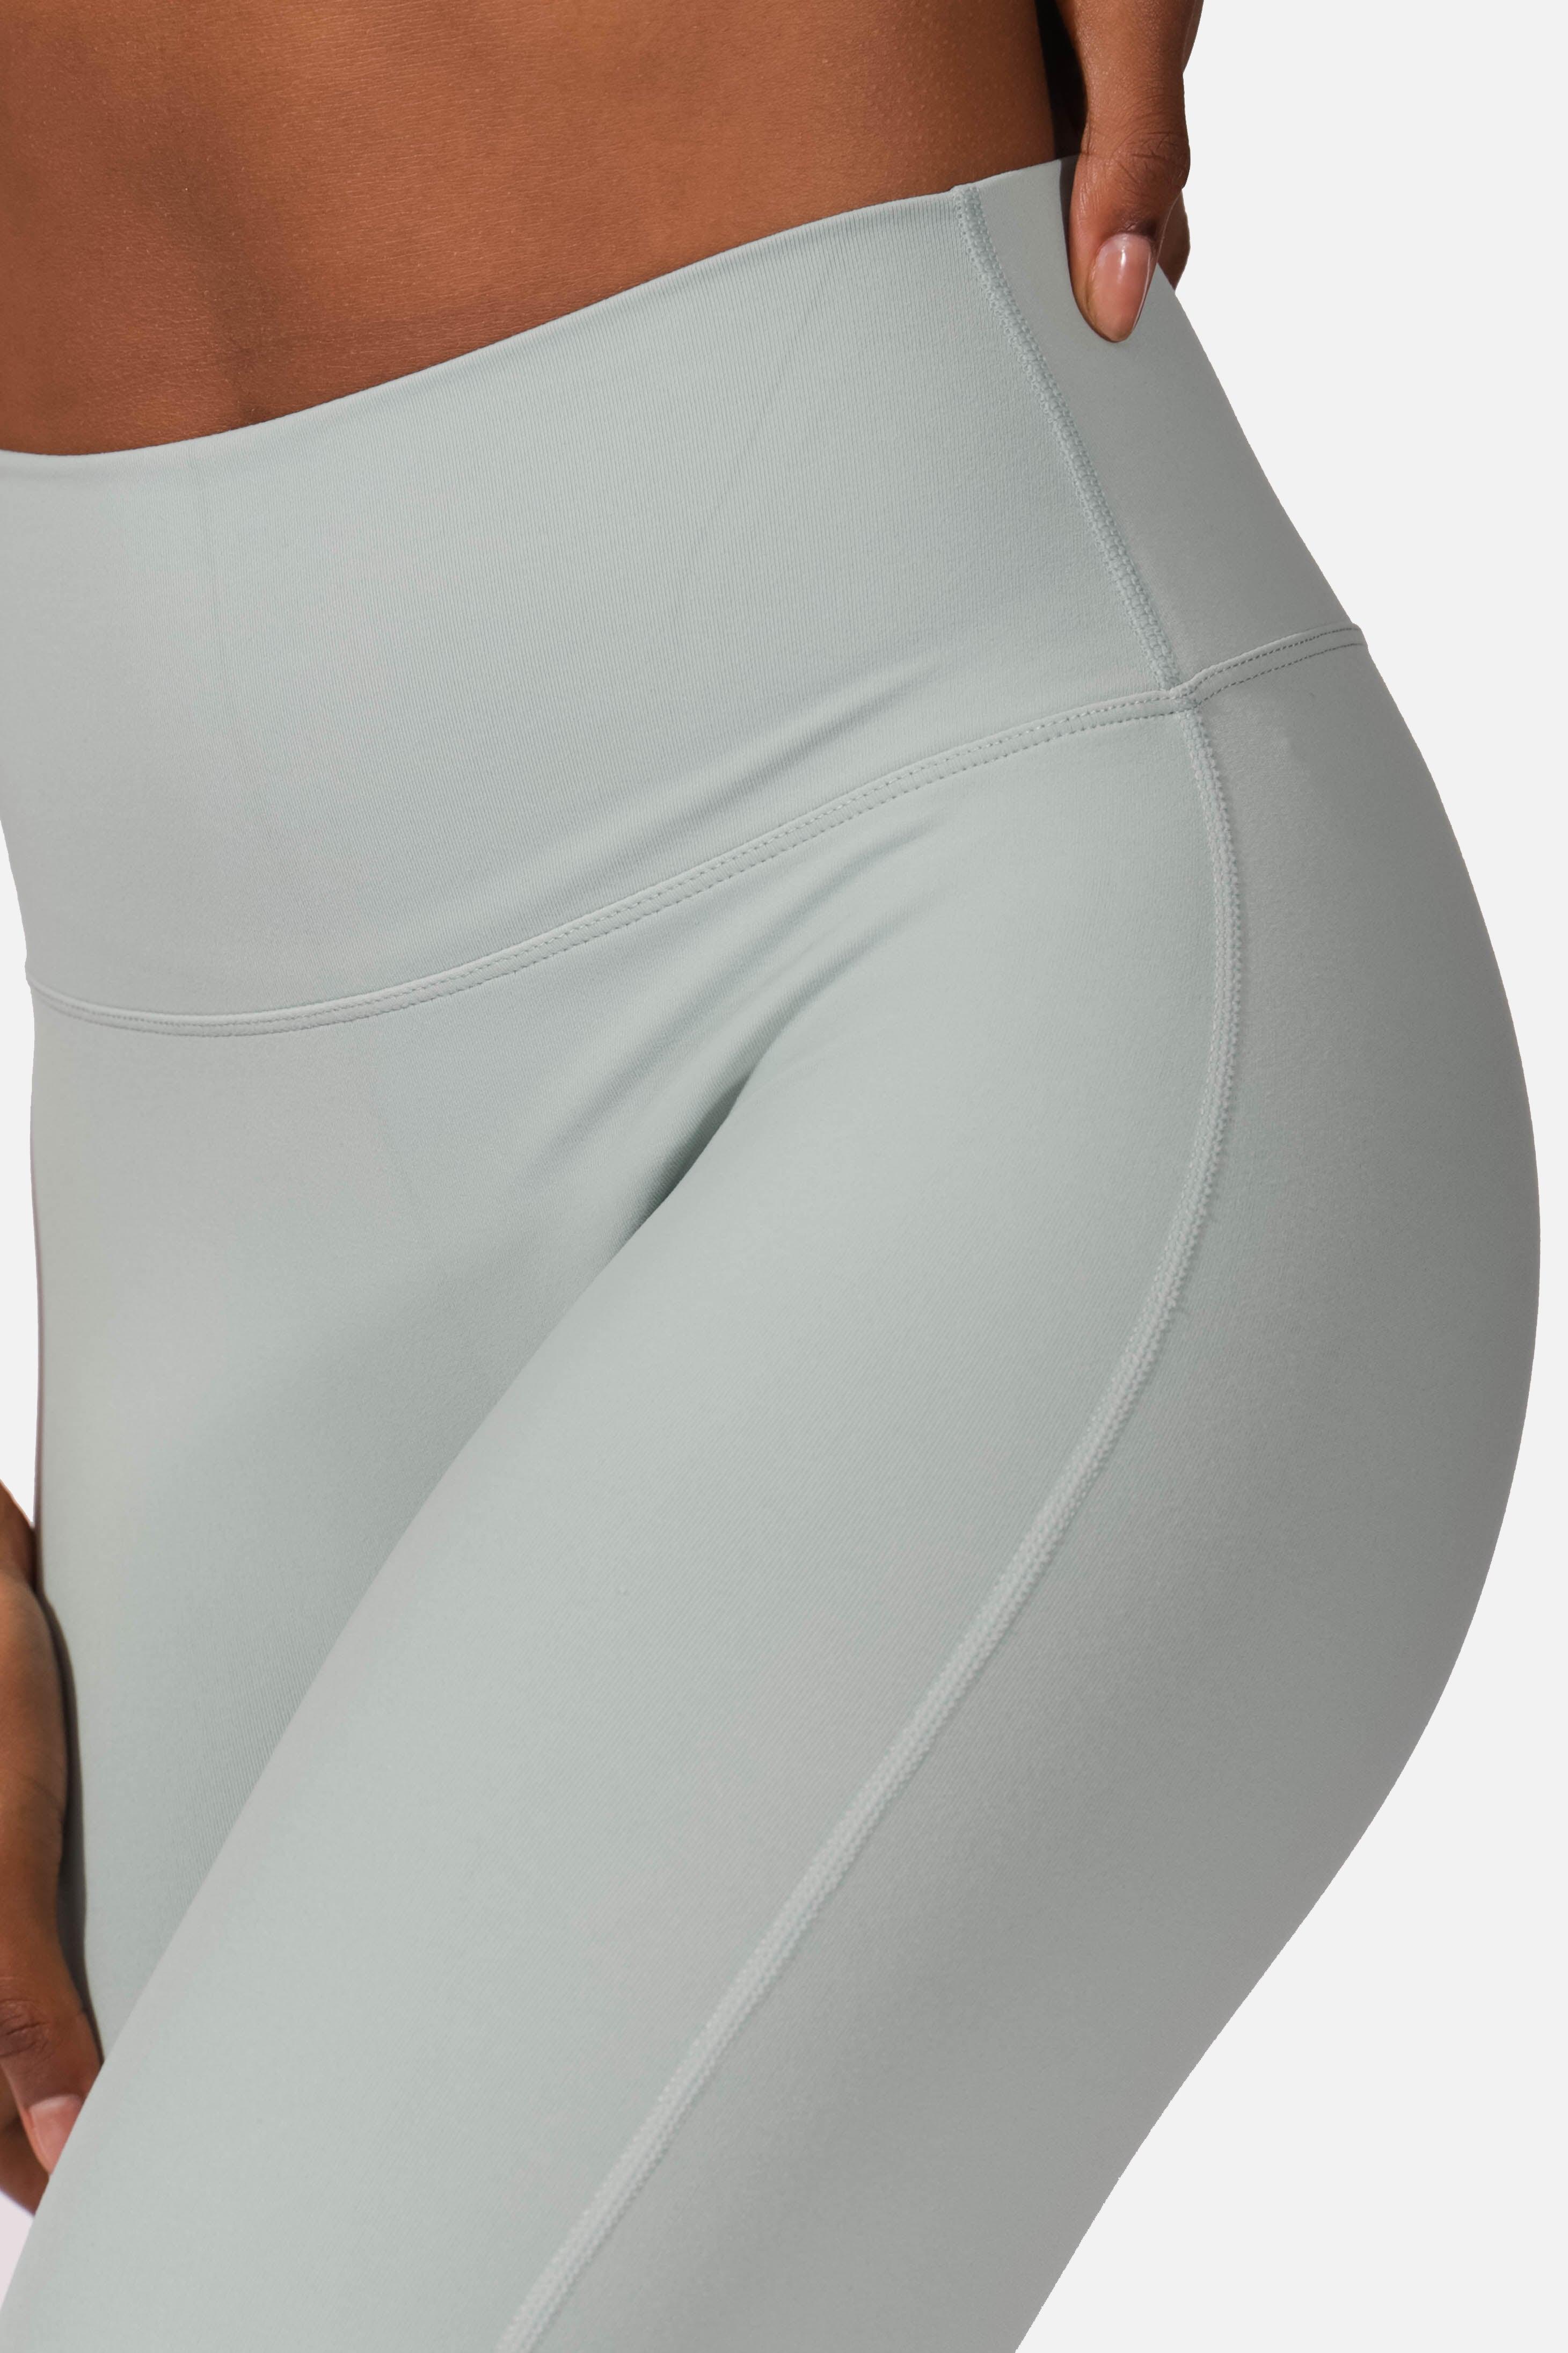 Yoga Pants, Improve Buttocks Curve Yoga Leggings Butt Lifting Reflect Light  For Home For Girls S,M,L,XL,XXL 